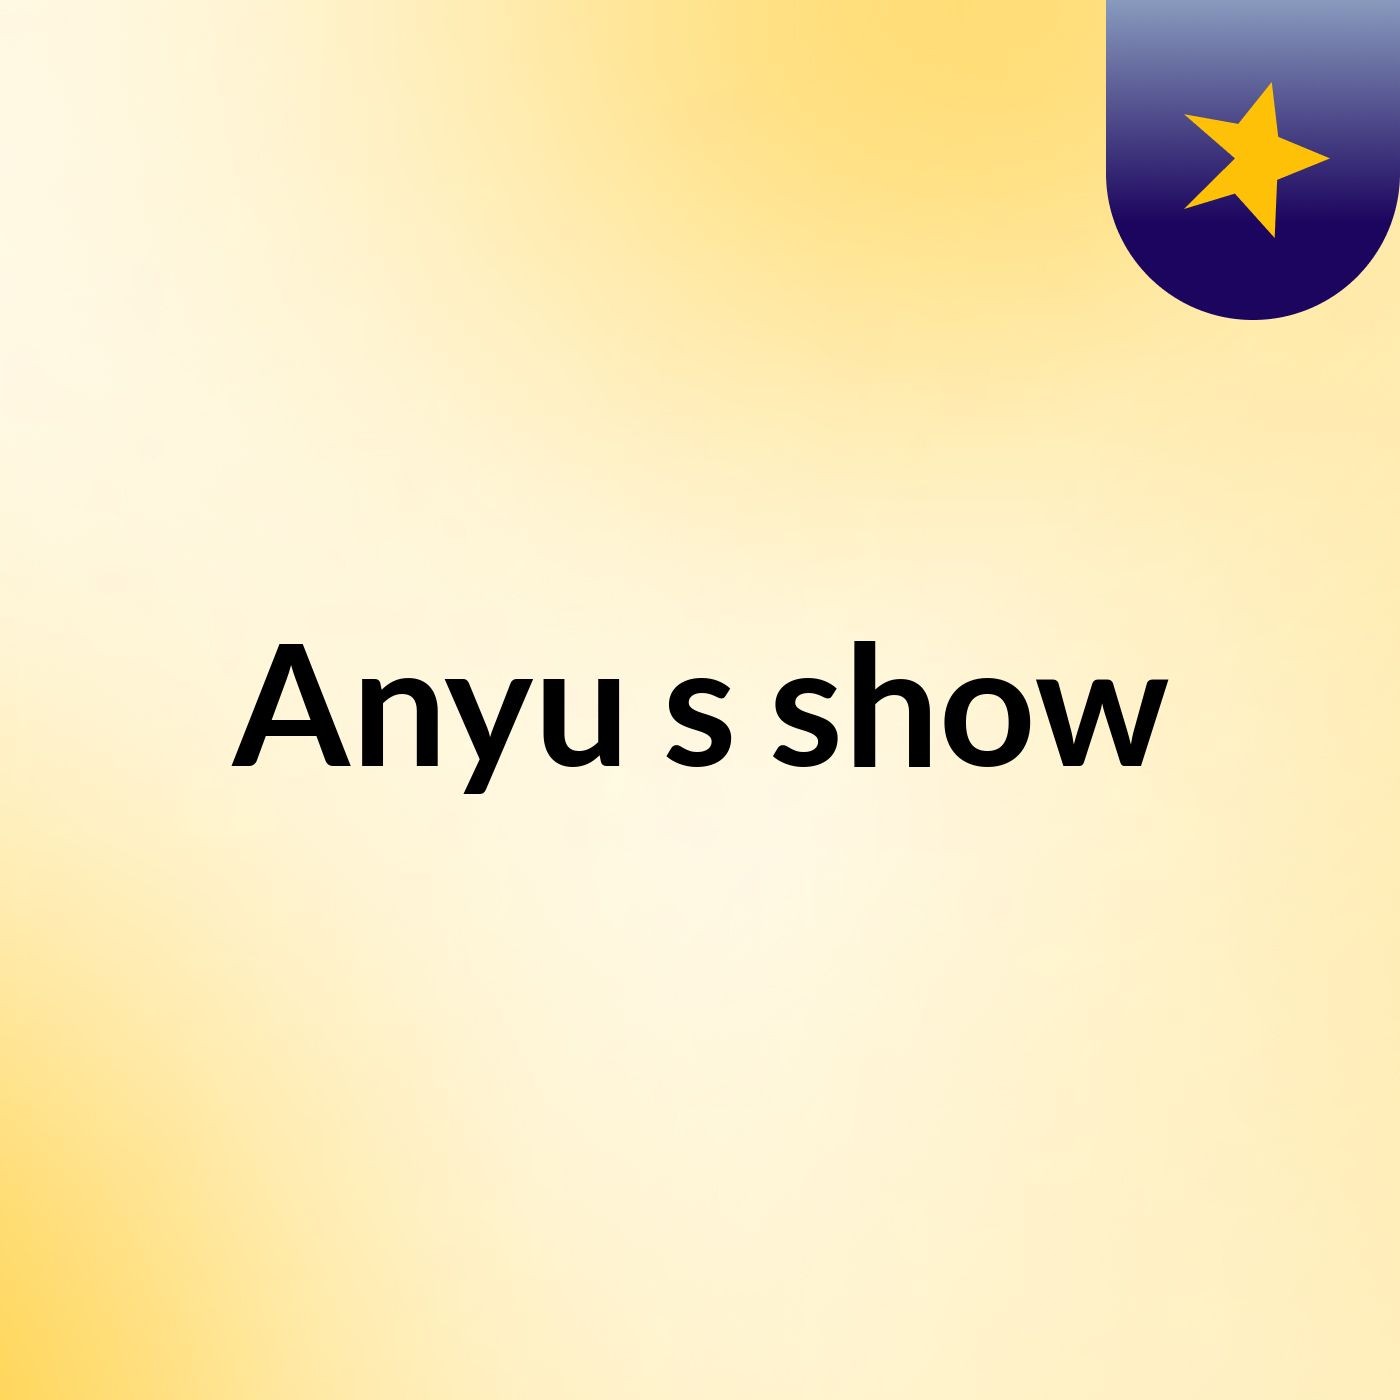 Anyu's show